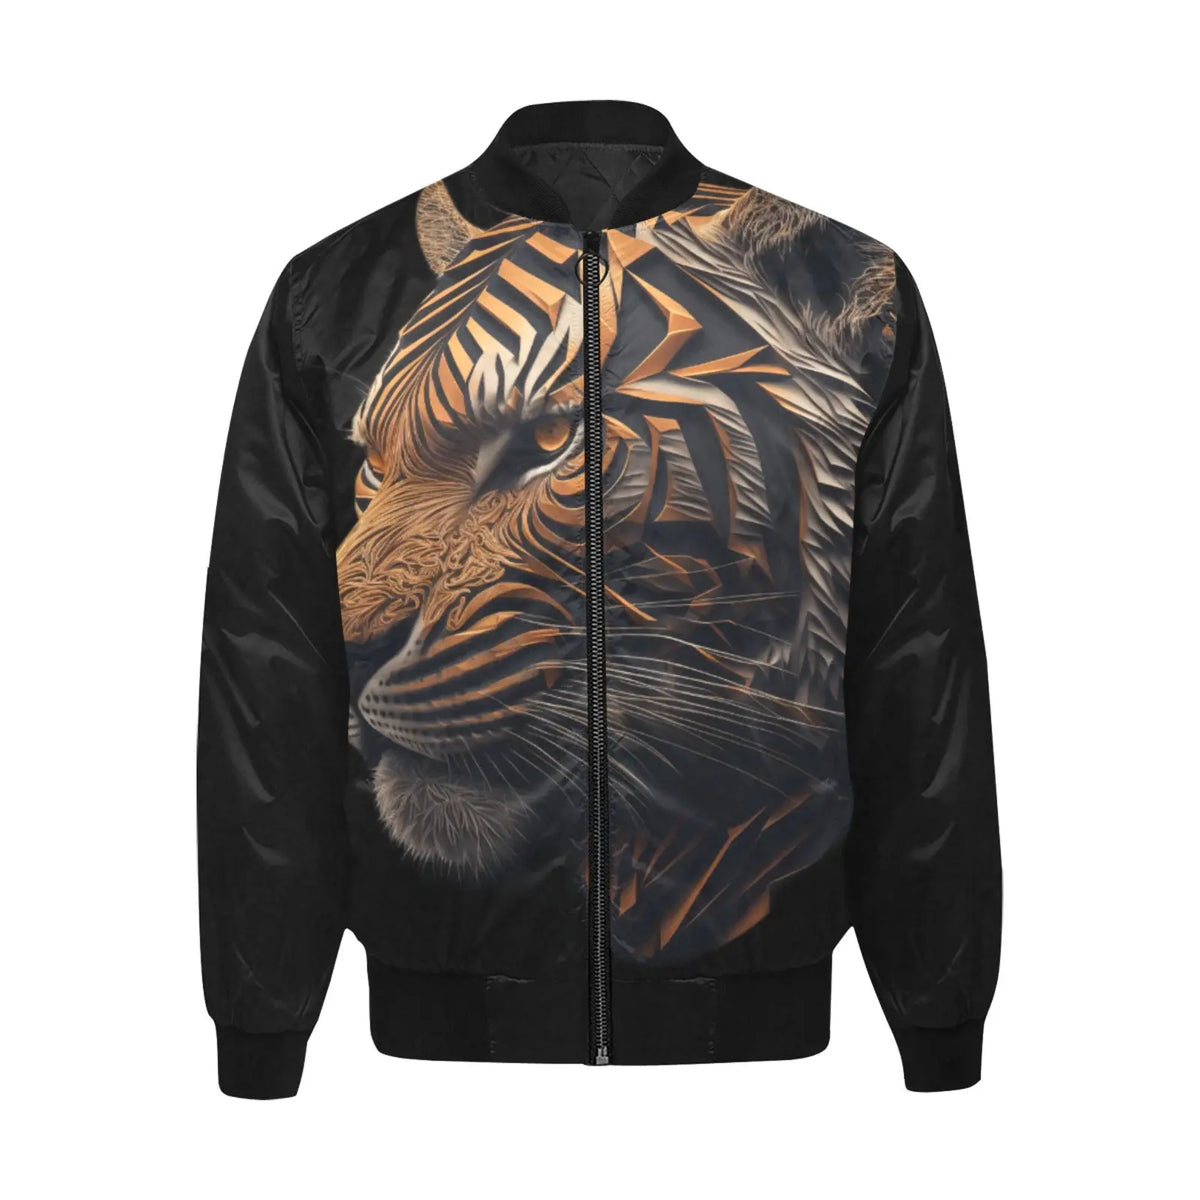 Tiger Clothes - Unleashing Your Fierce Fashion Sense